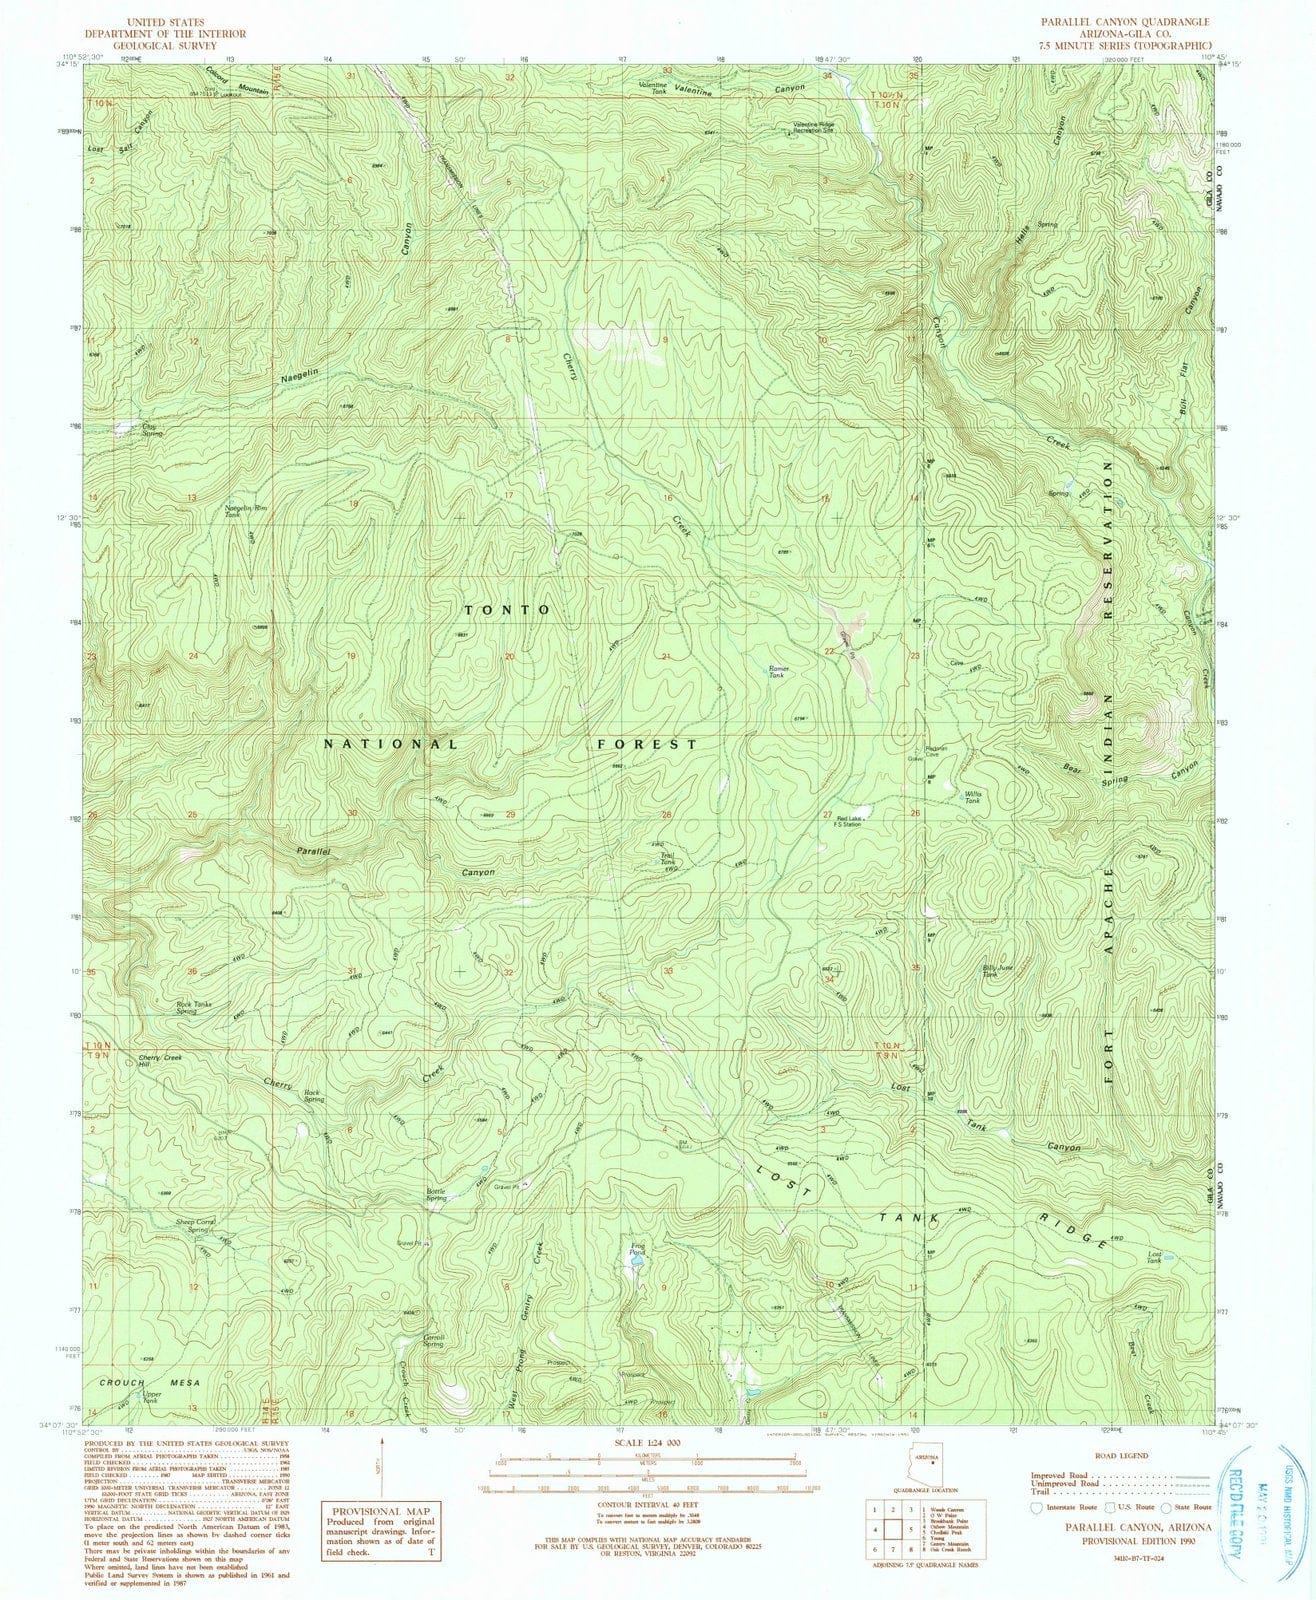 1990 Parallel Canyon, AZ - Arizona - USGS Topographic Map